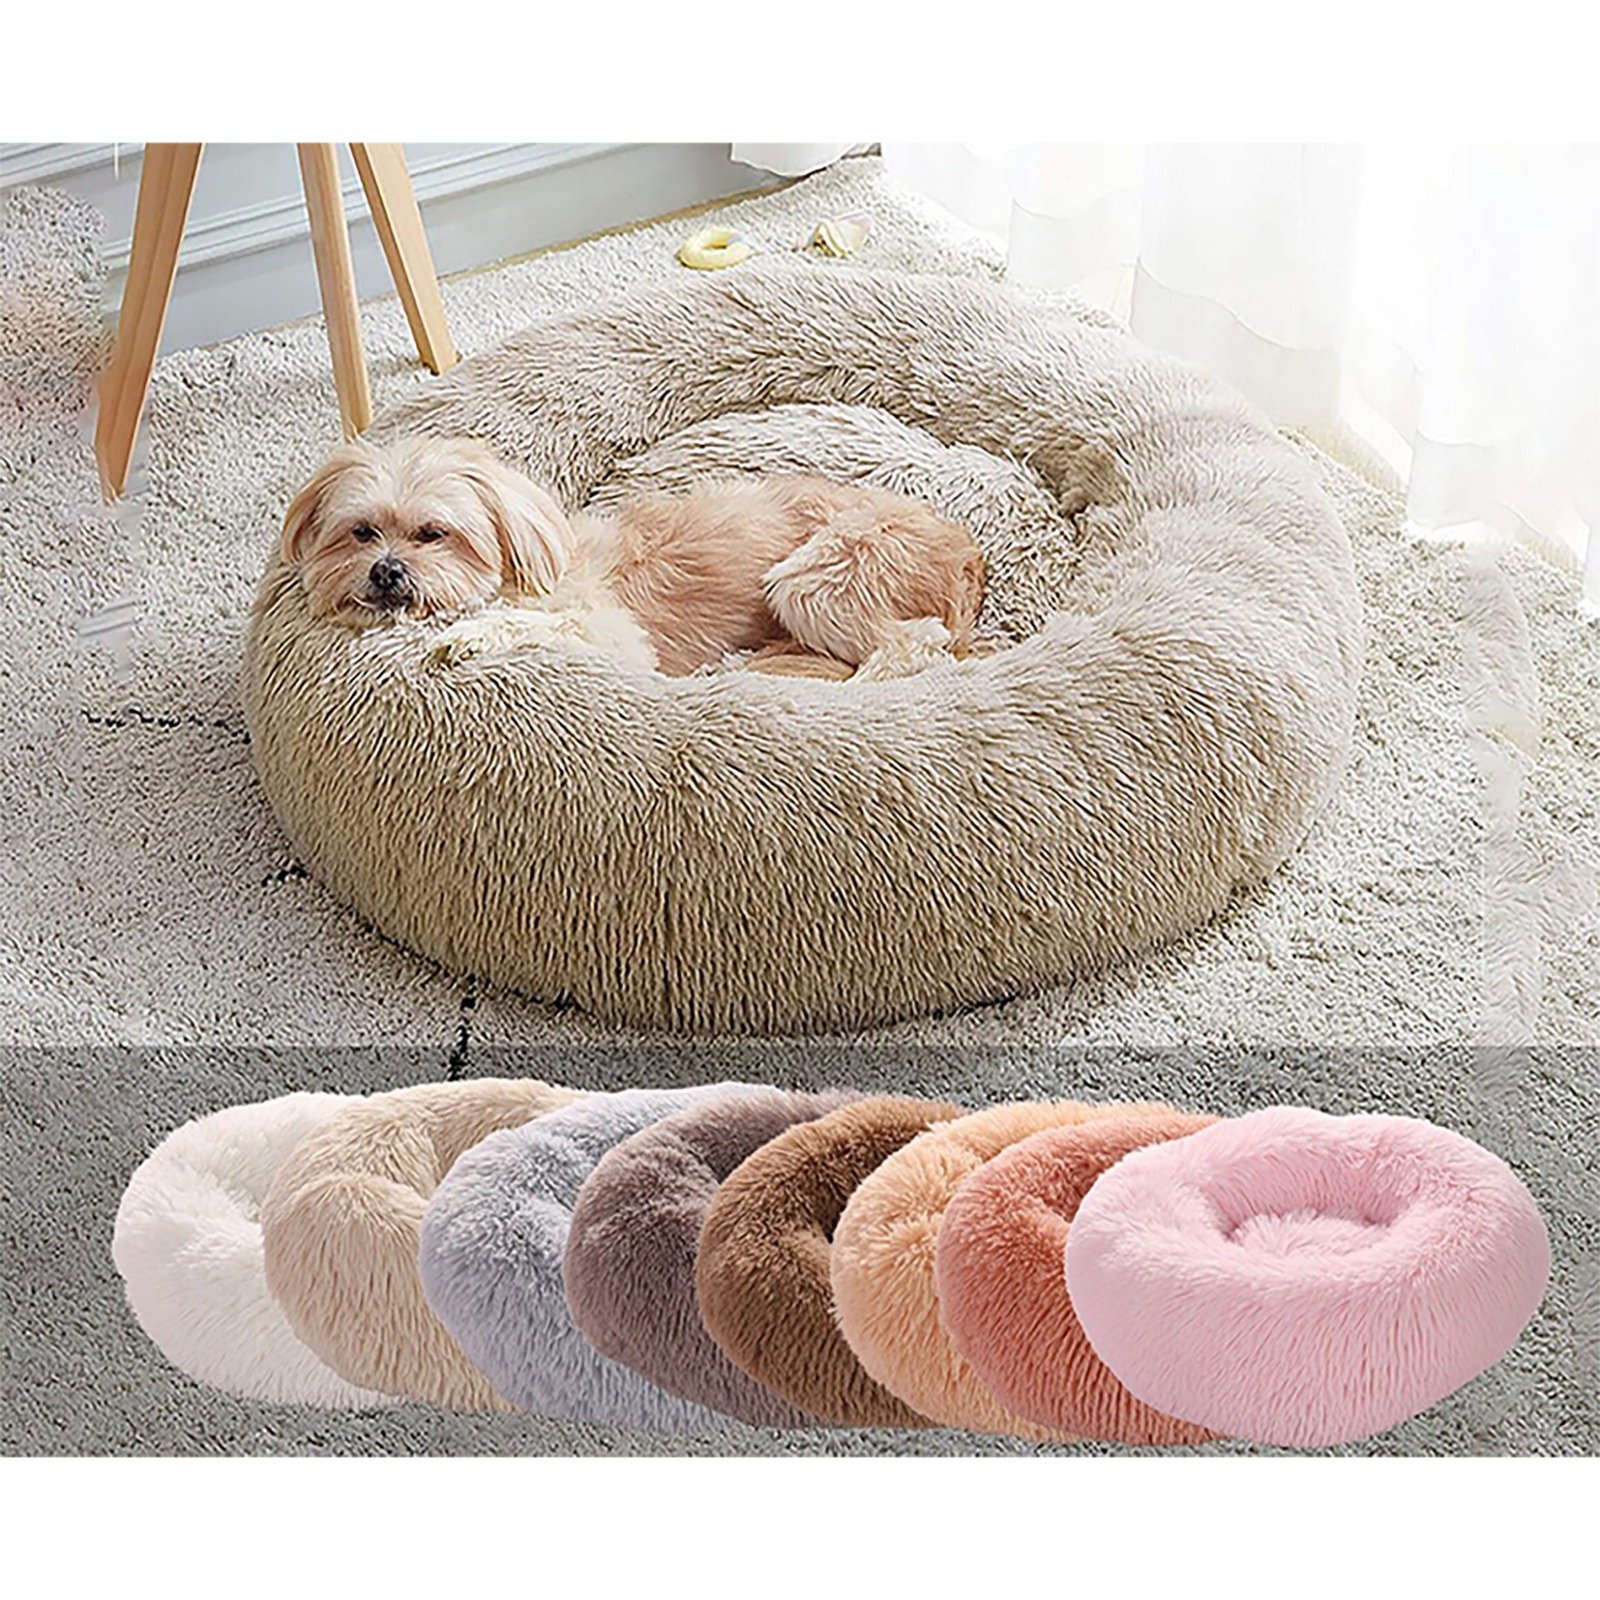 luxury-round-dog-bed-manufacture